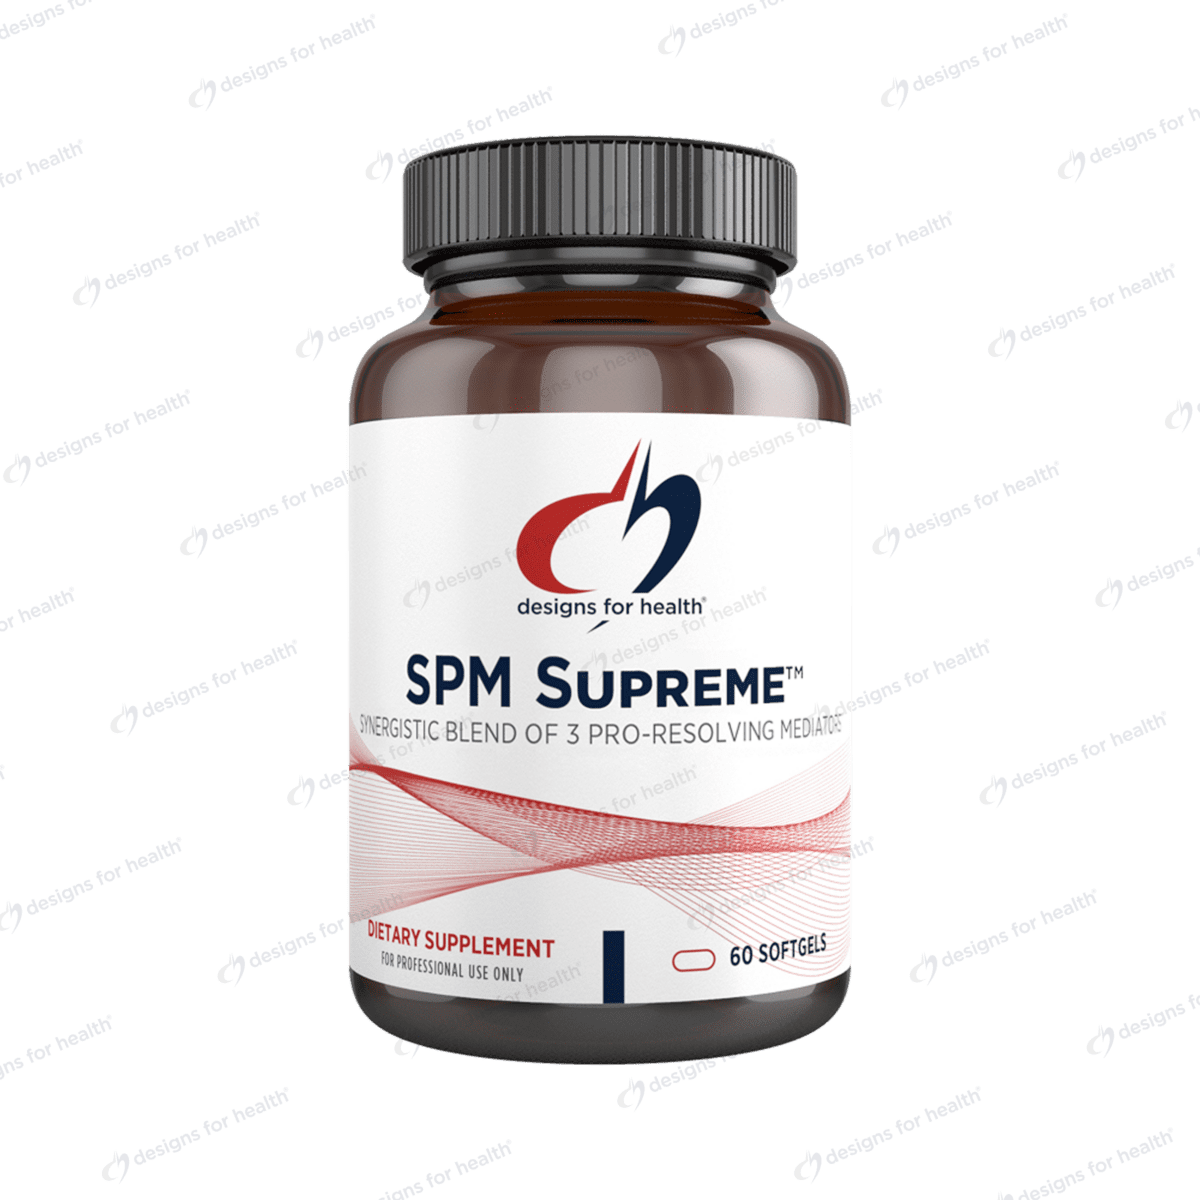 SPM Supreme™